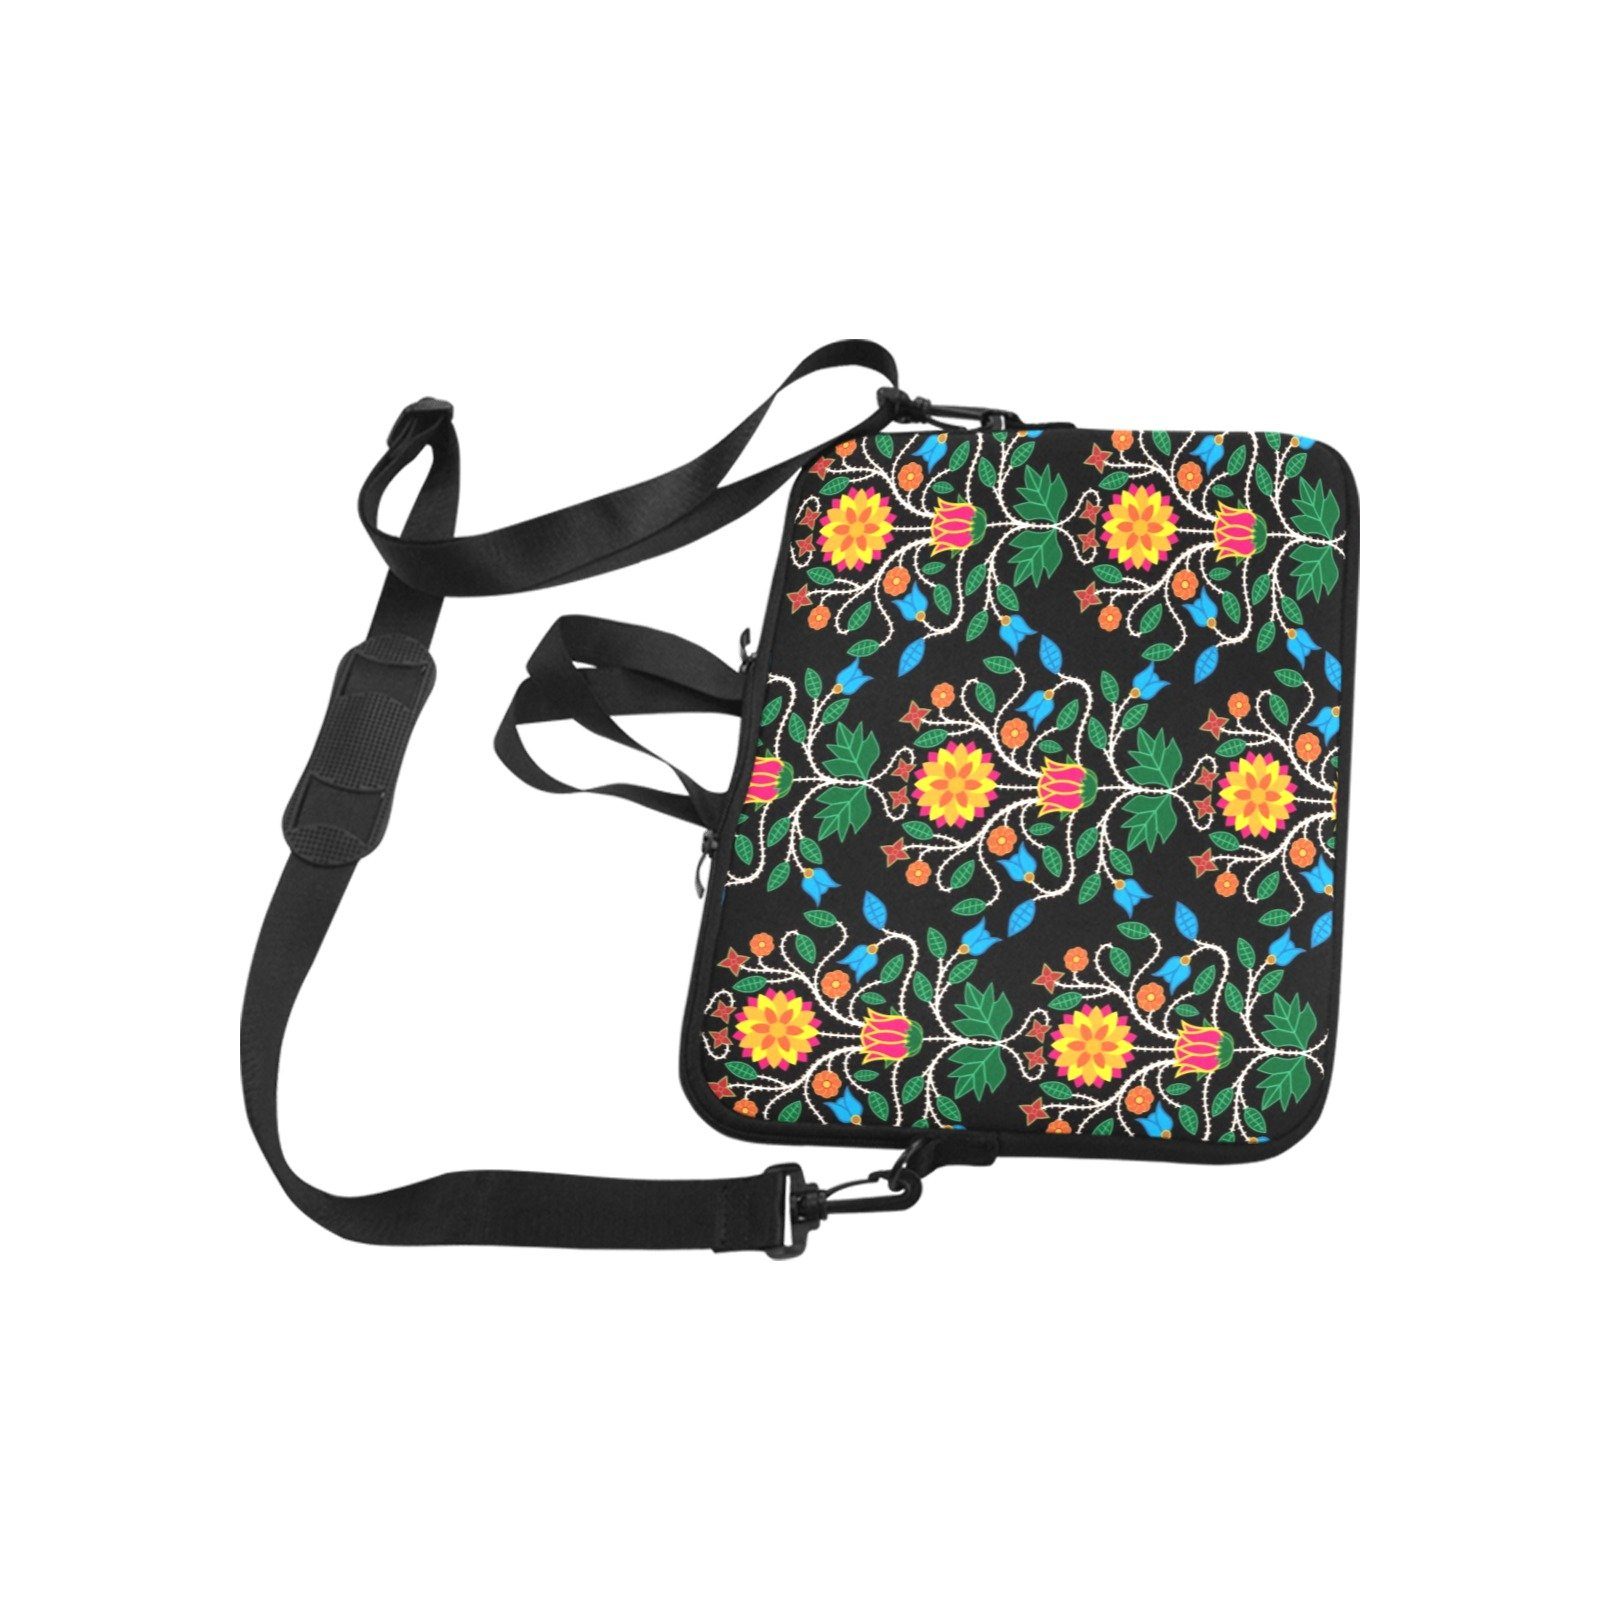 Floral Beadwork Four Clans Laptop Handbags 10" bag e-joyer 